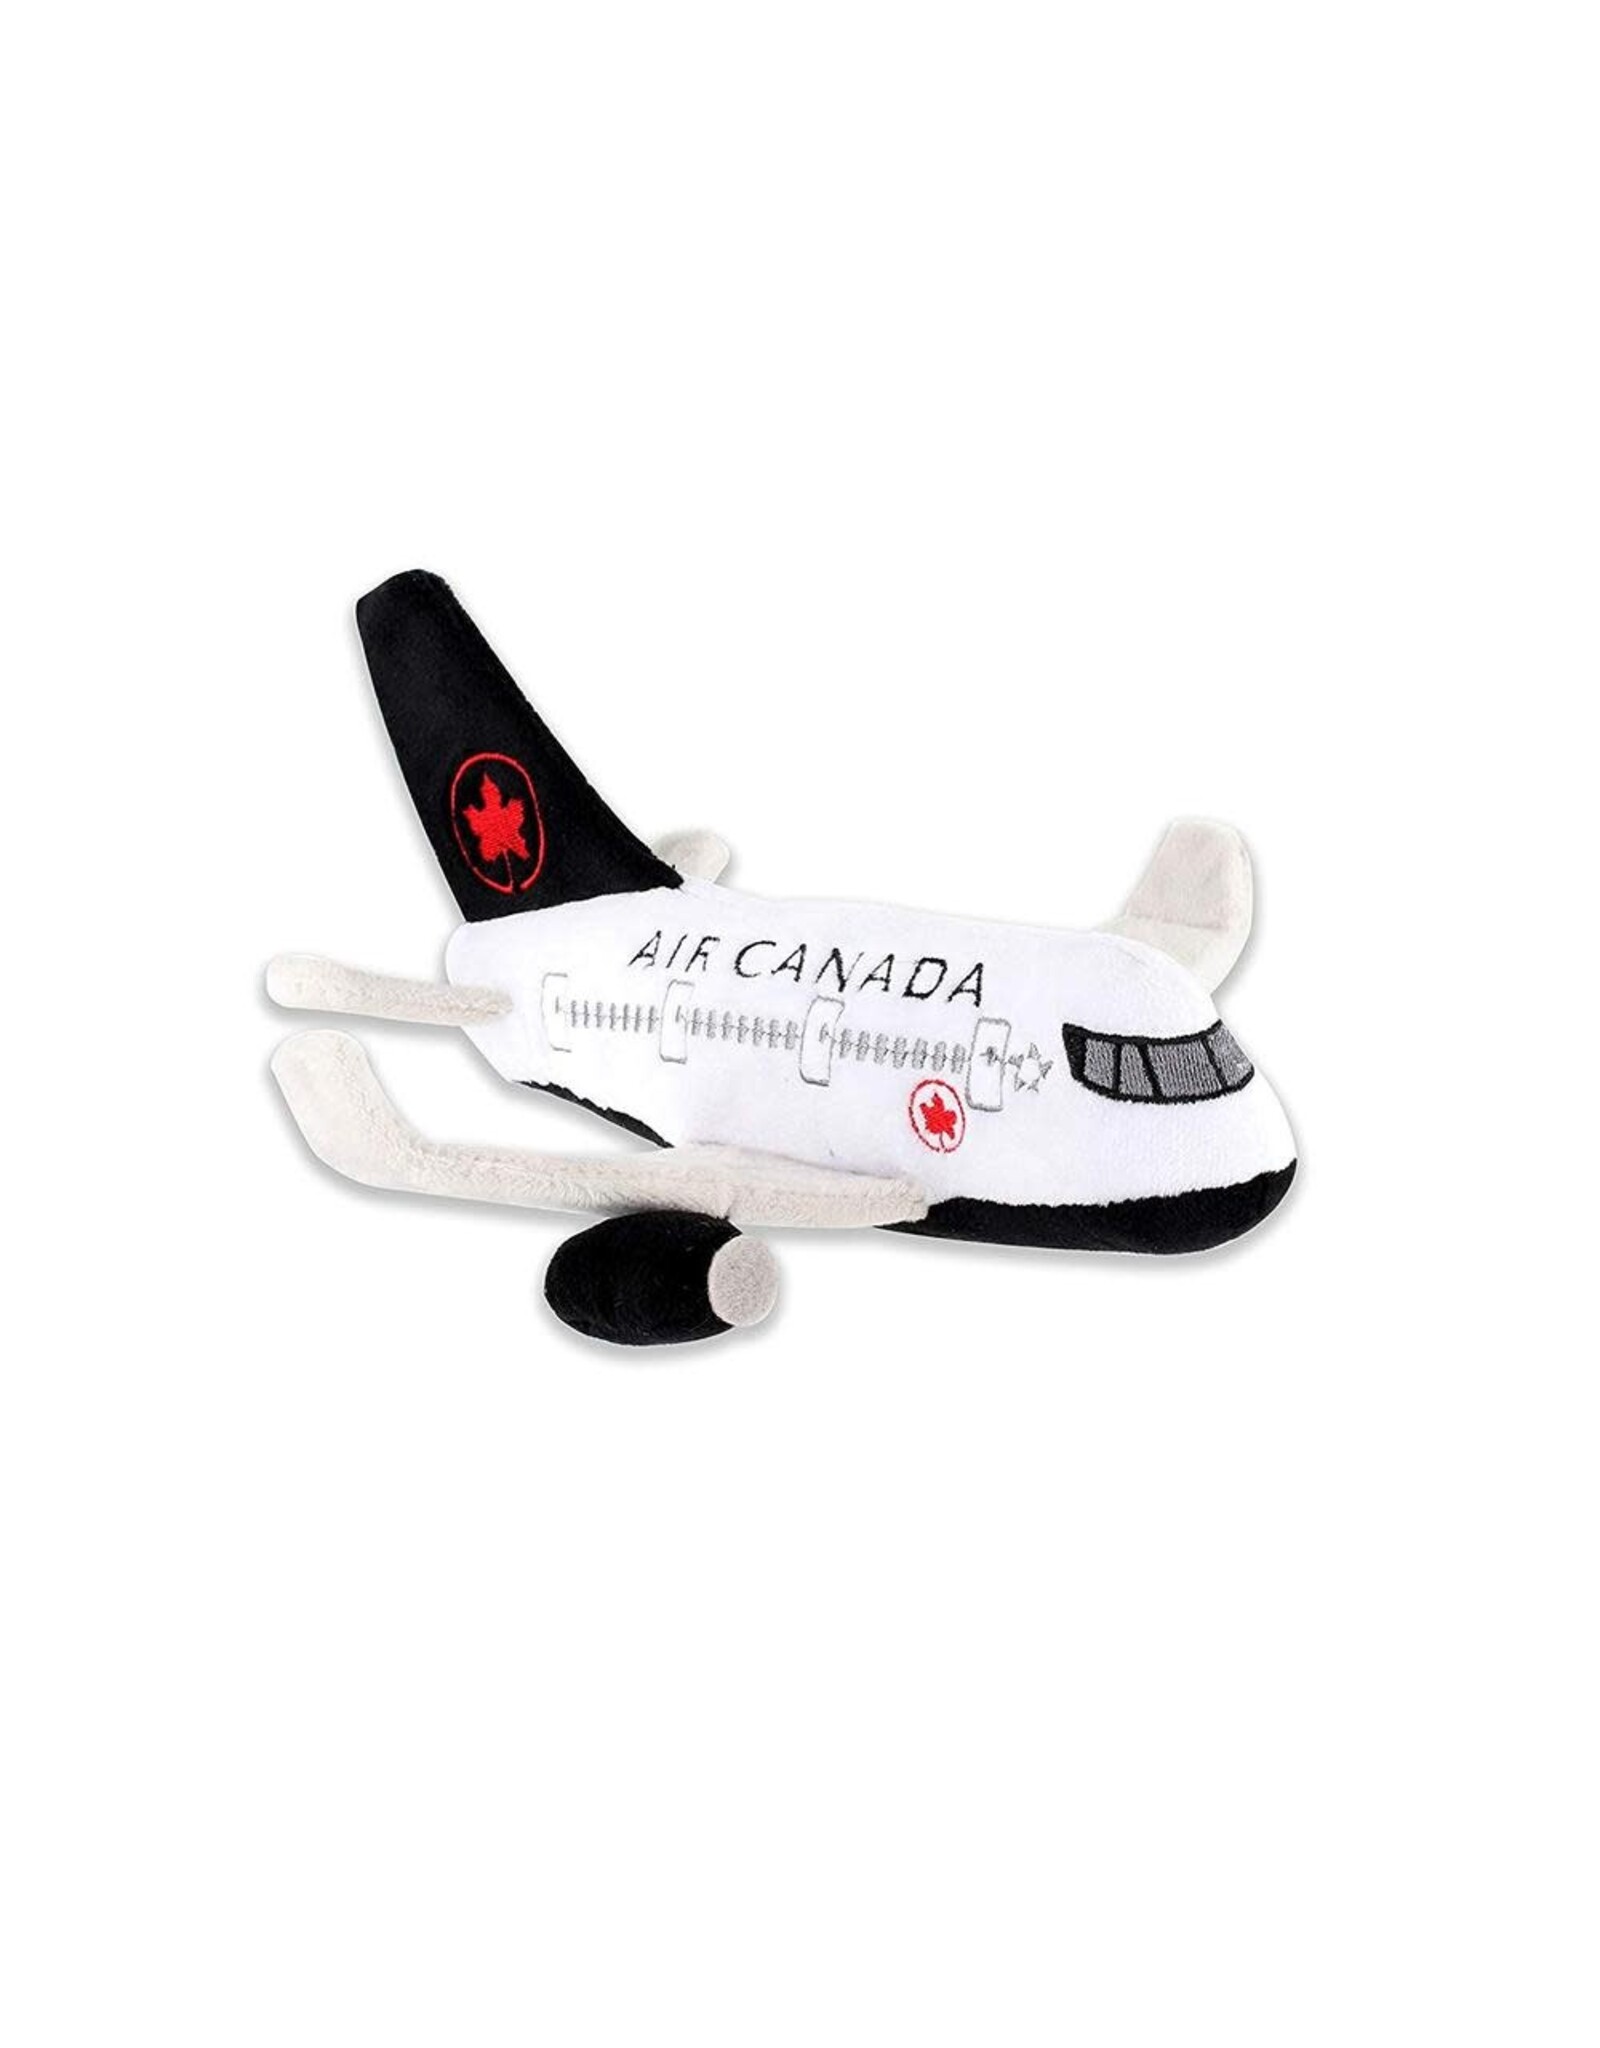 Daron Air Canada Plush Airline